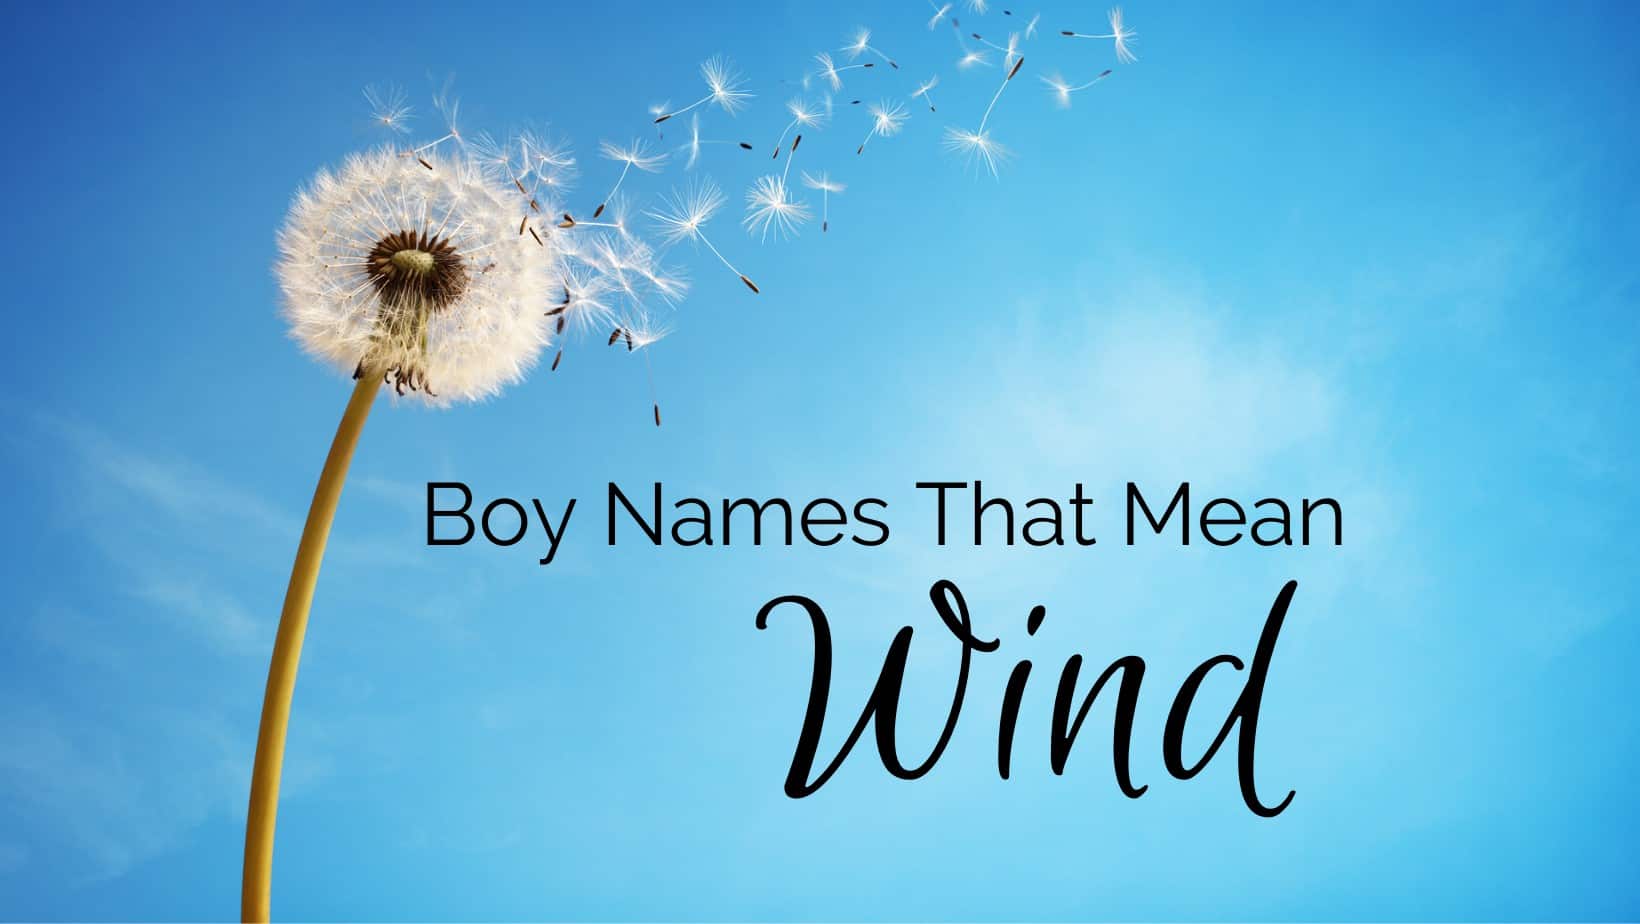 Boy Names That Mean Wind